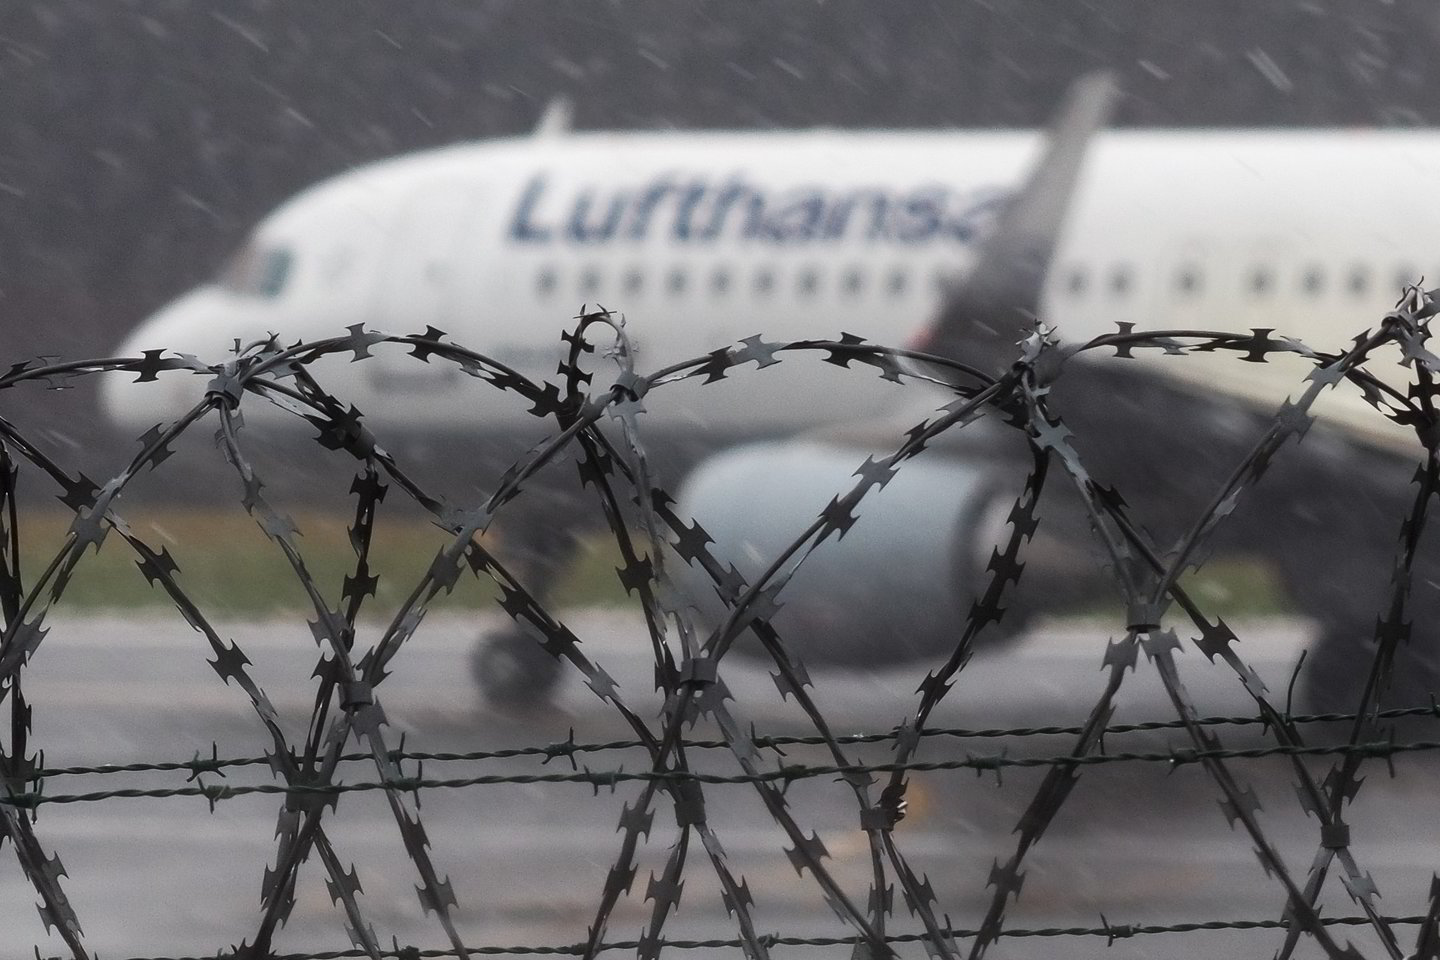 Lietuviai gana dažnai skraido su „Lufthansa“ nuotr. <br>V.Ščiavinsko nuotr.